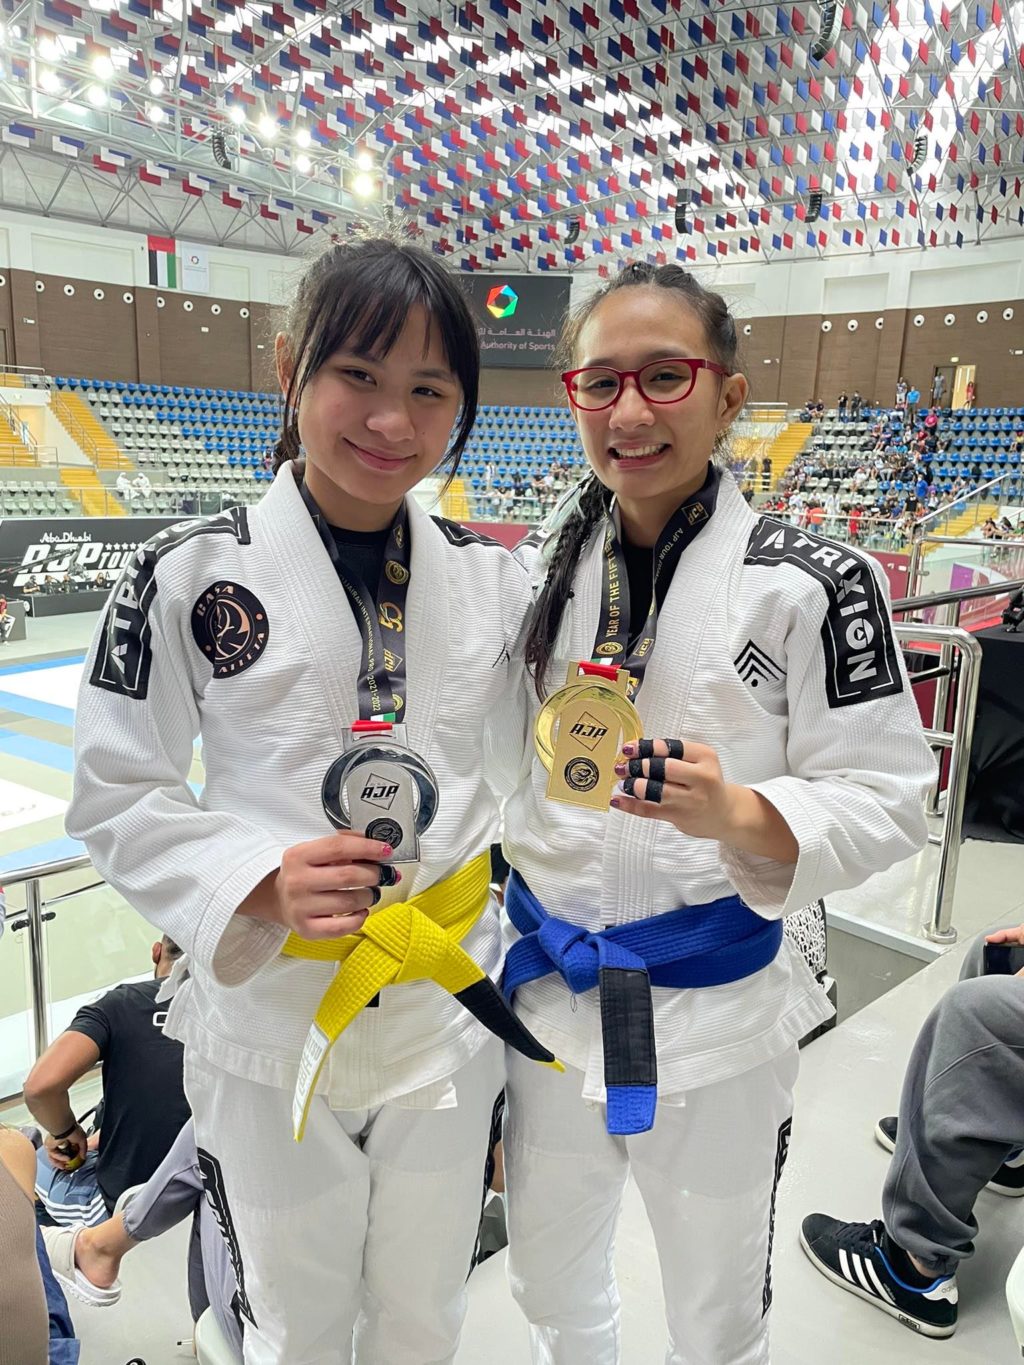 Malilay siblings win medals in Abu Dhabi Jiu-jitsu tournament. Ellise Xoe (left) and Eliecha Zoey (right) Malilay proudly show the medals they have won in the Abu Dhabi Jiu-Jitsu Pro Tour Fujairah International Pro-Gi tournament. | Contributed Photo